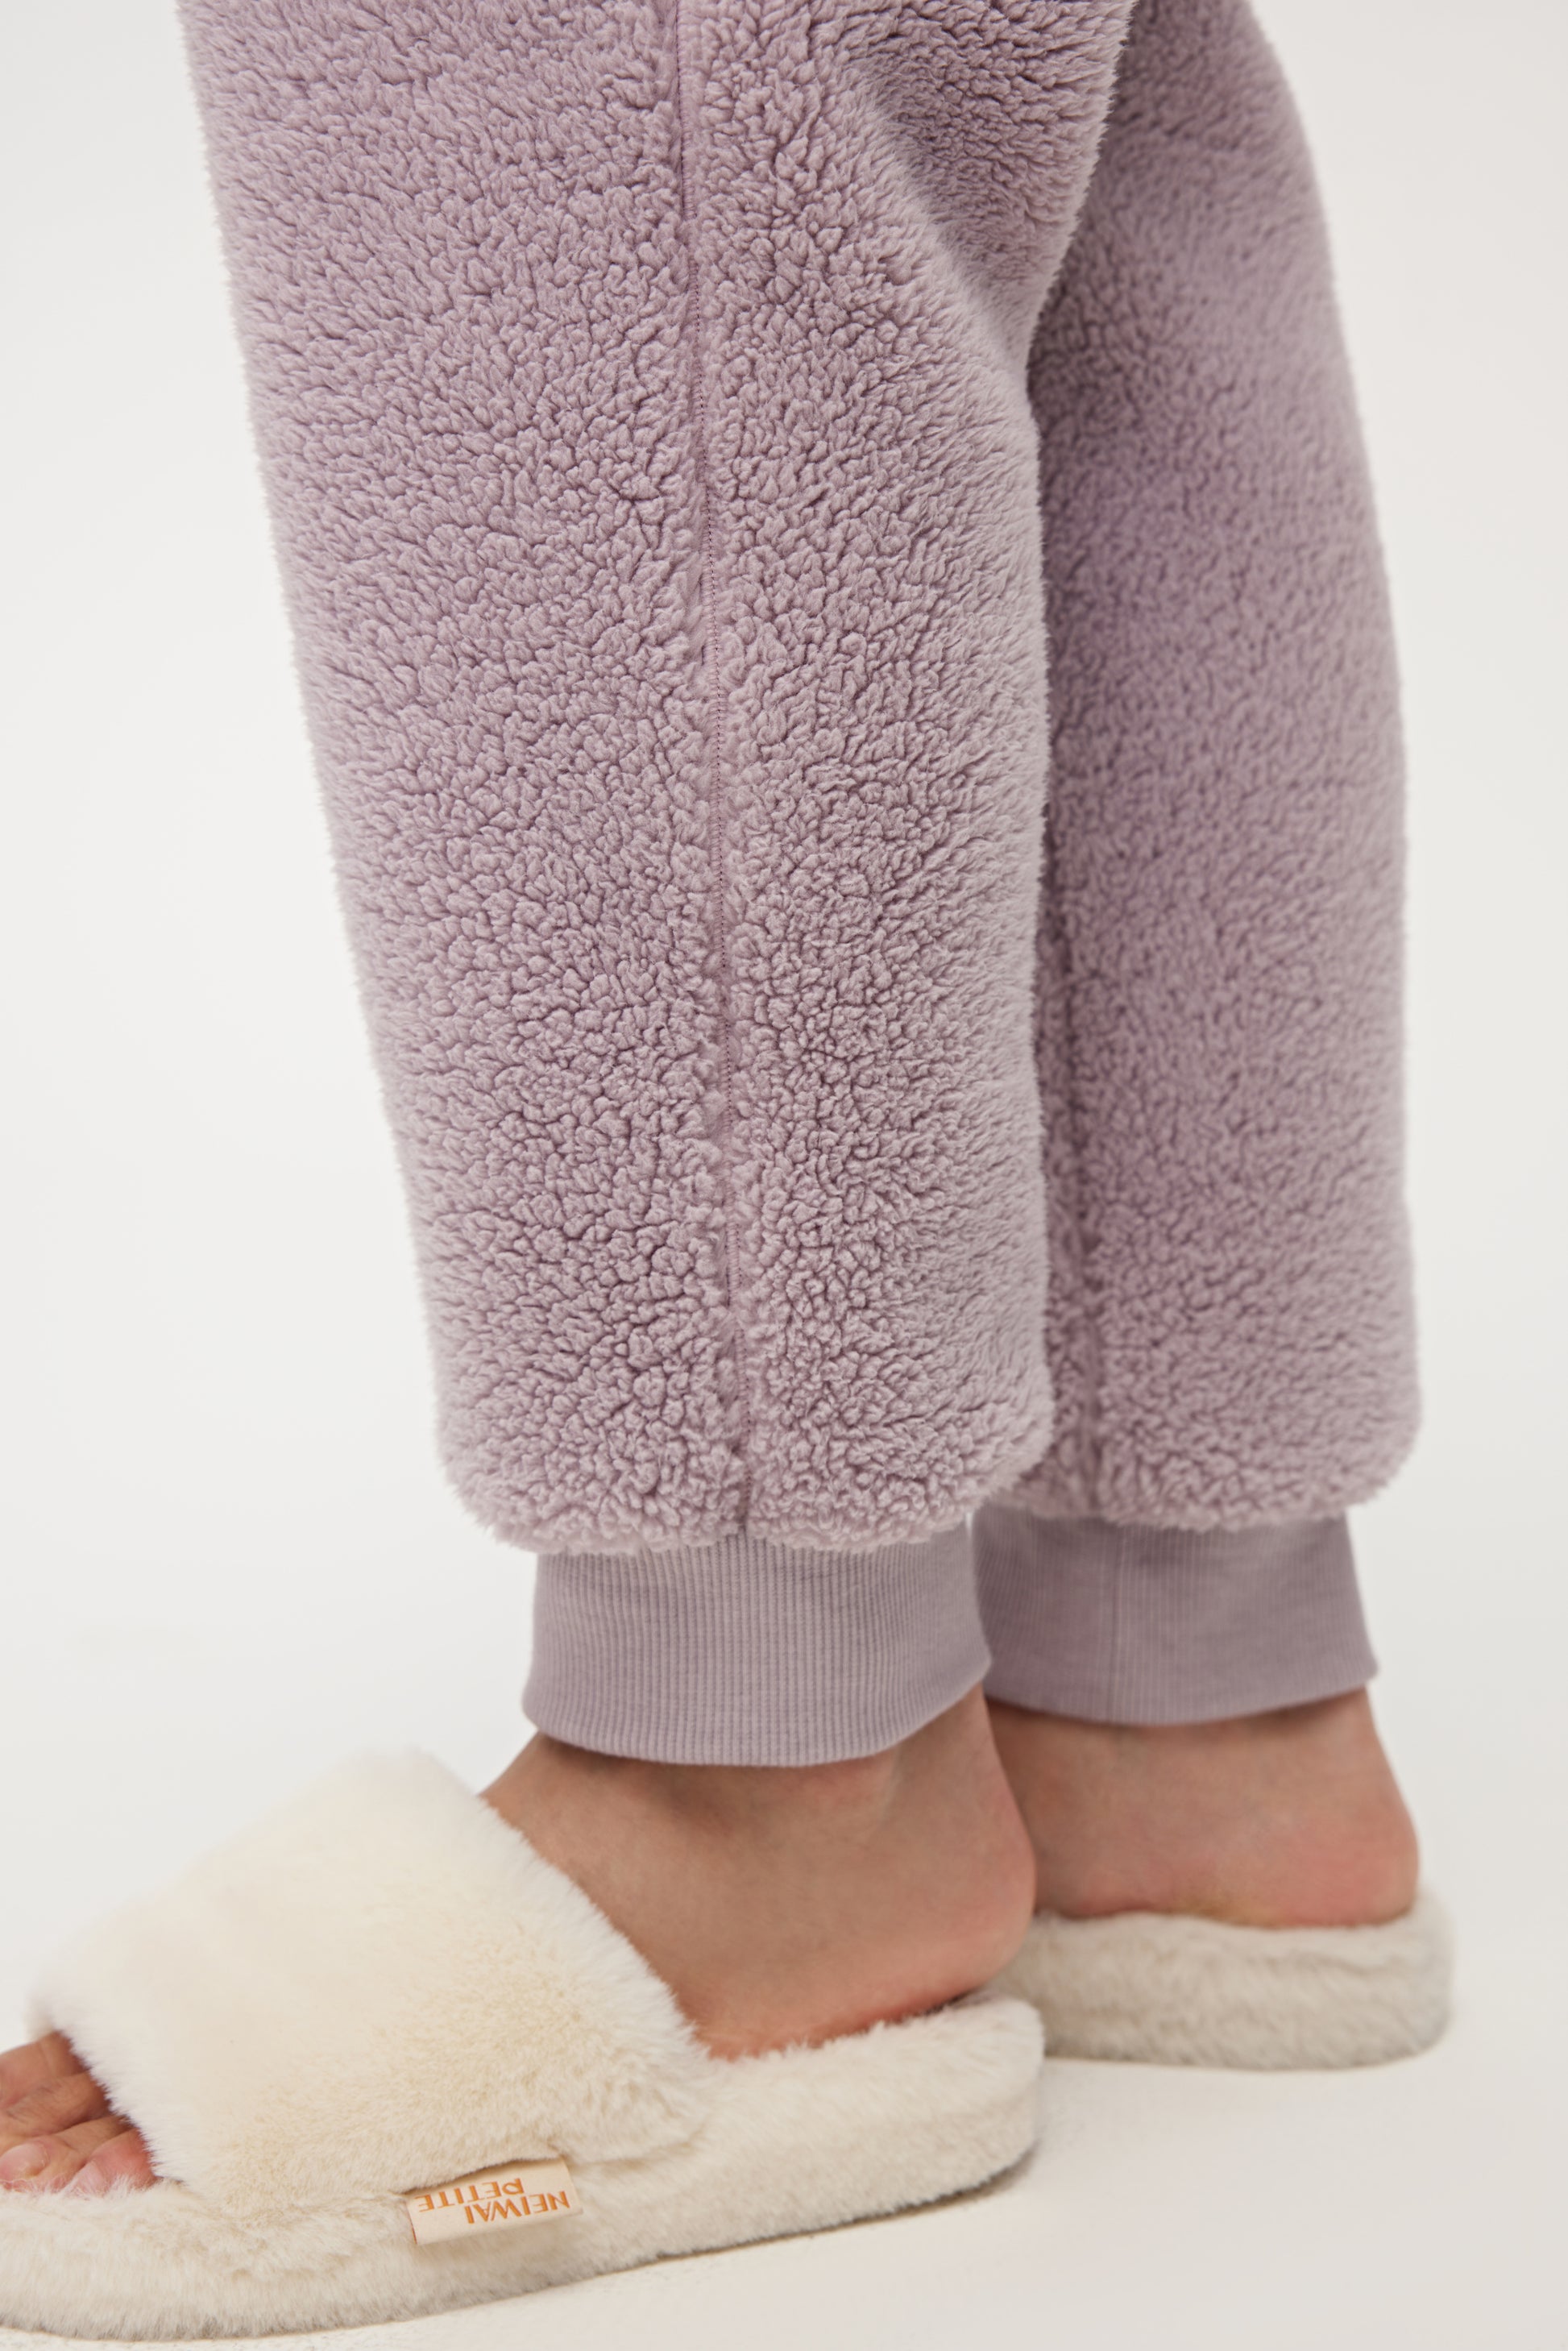 The lower part of purple Fleece Pajama Pants